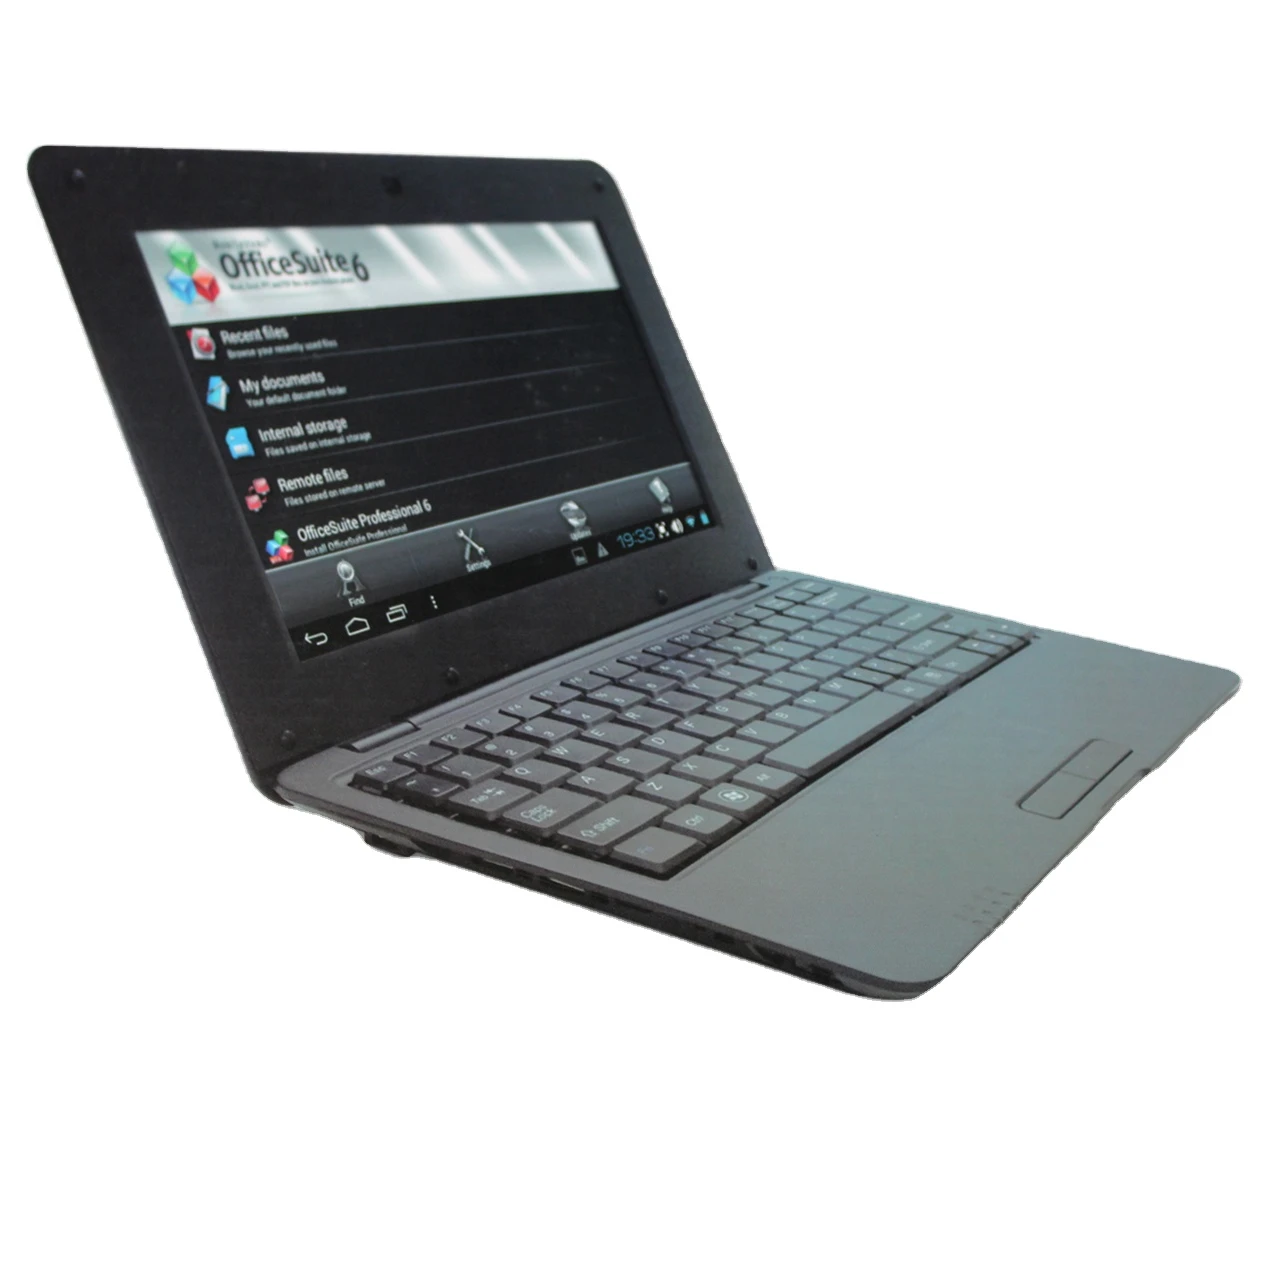 

2020 wholesale 10.1 inch laptop A33 8gb cheap notebook mini laptop